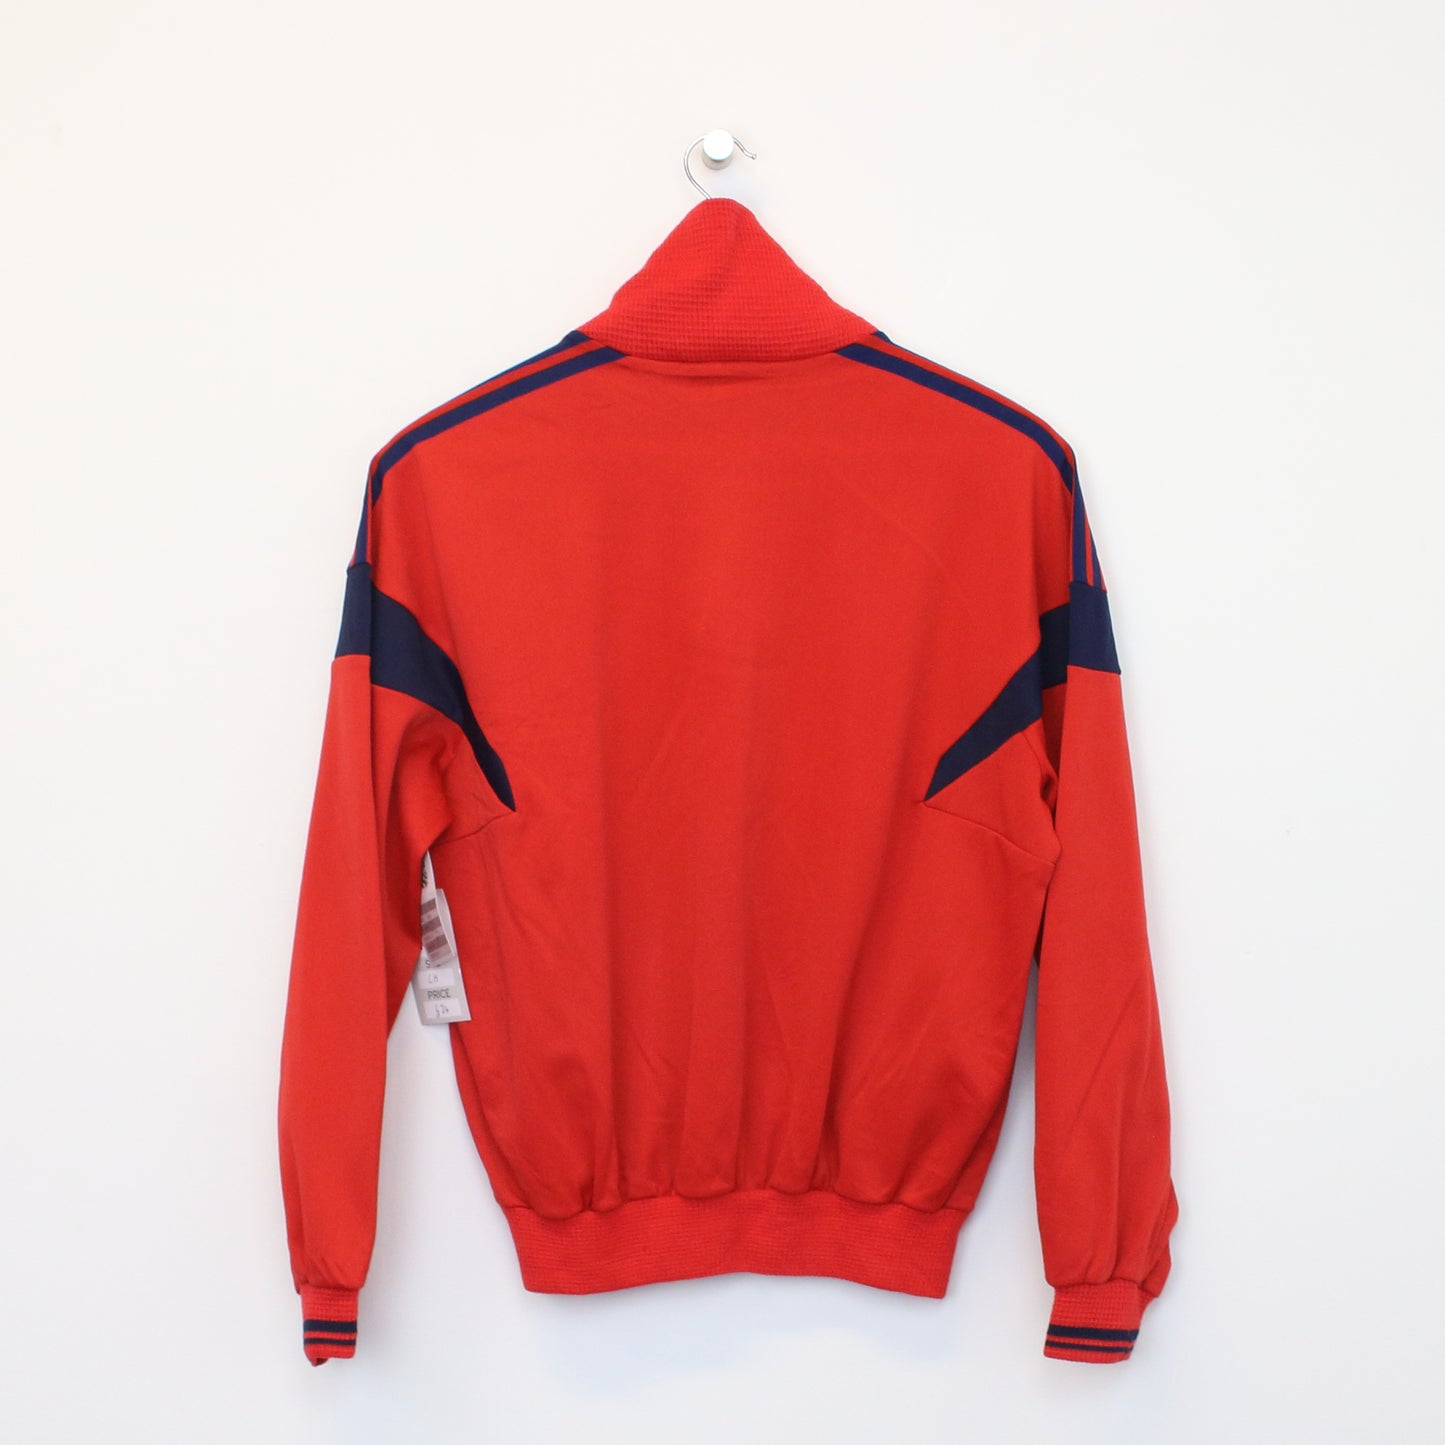 Vintage Adidas jacket in red. Best fits S